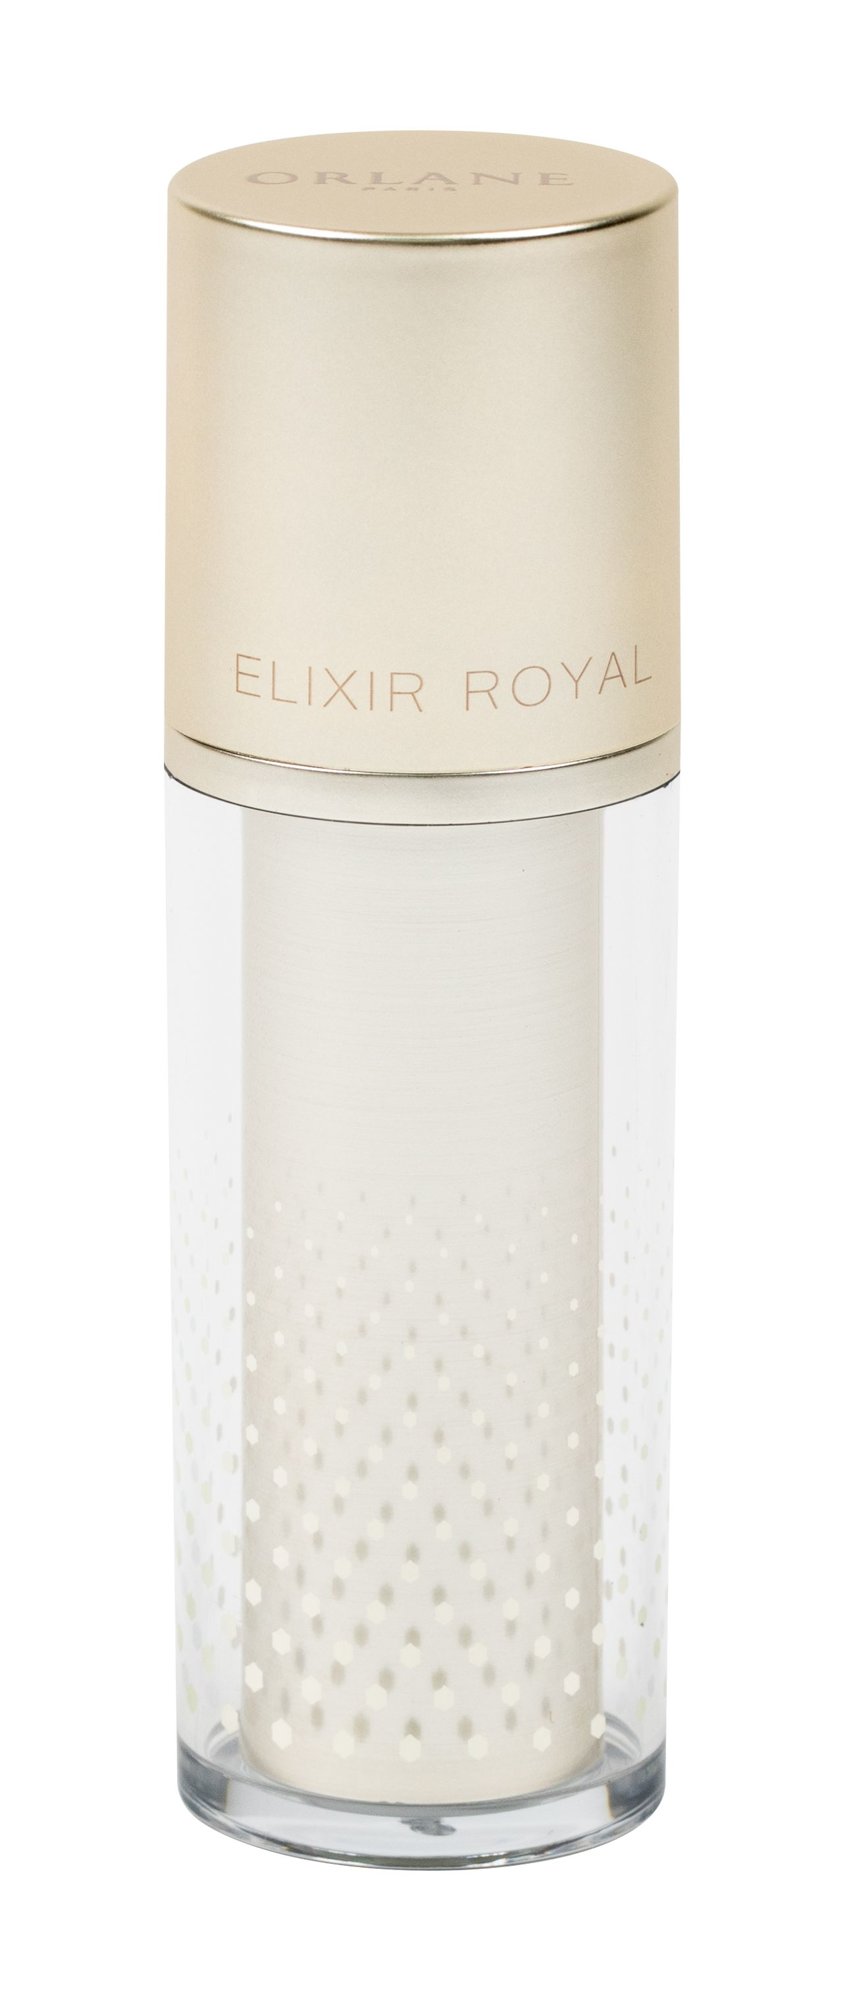 Orlane Creme Royale Elixir Royal